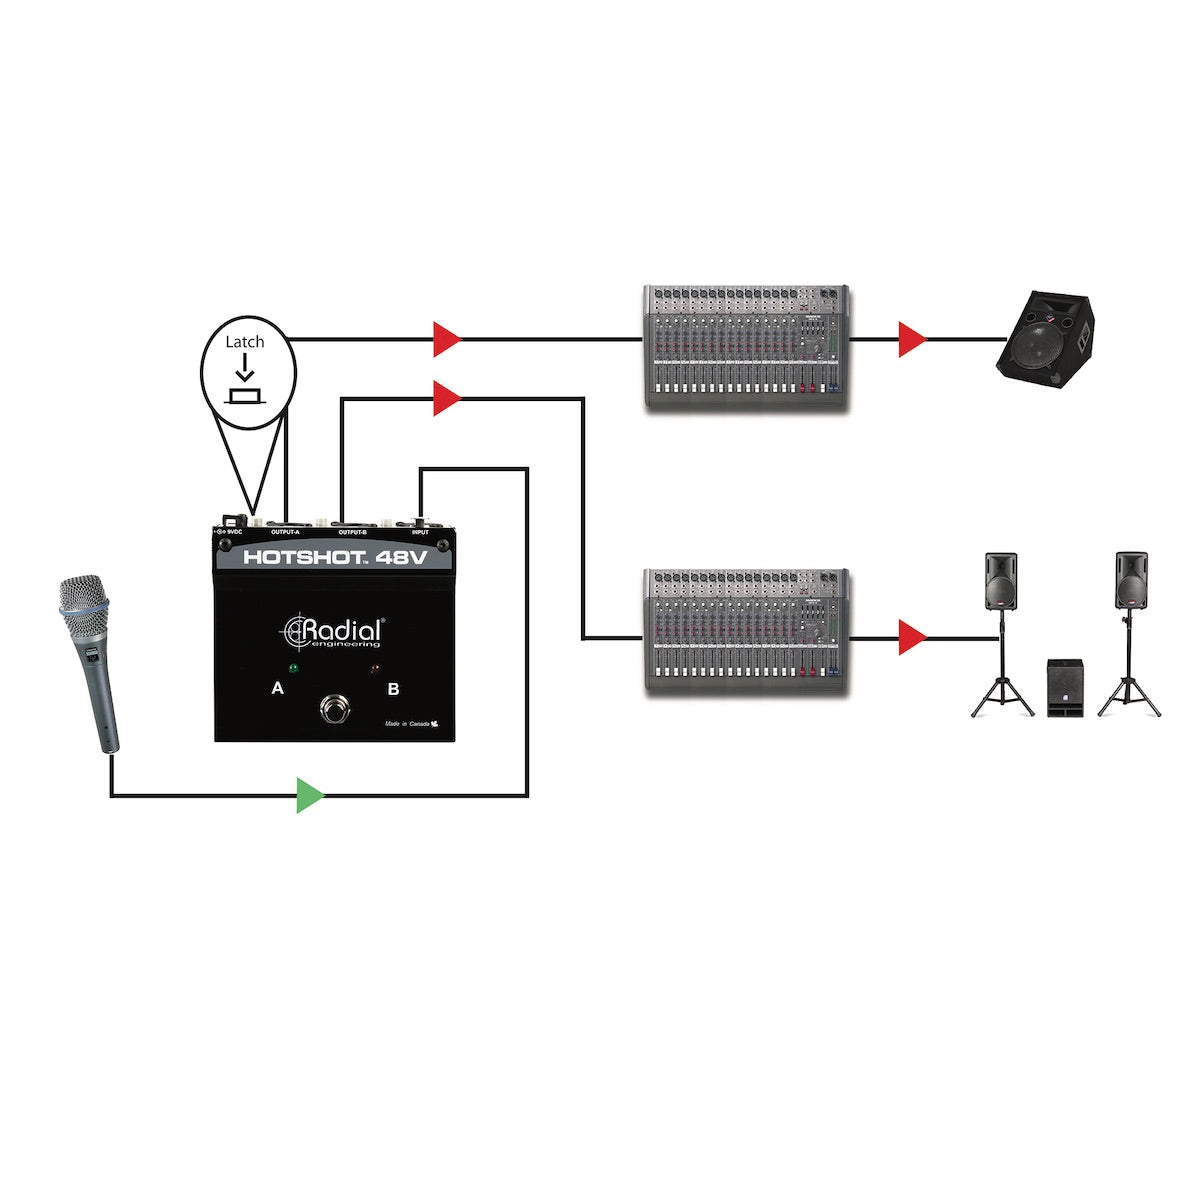 Radial HotShot 48V - Condenser Microphone Switcher, applications 2